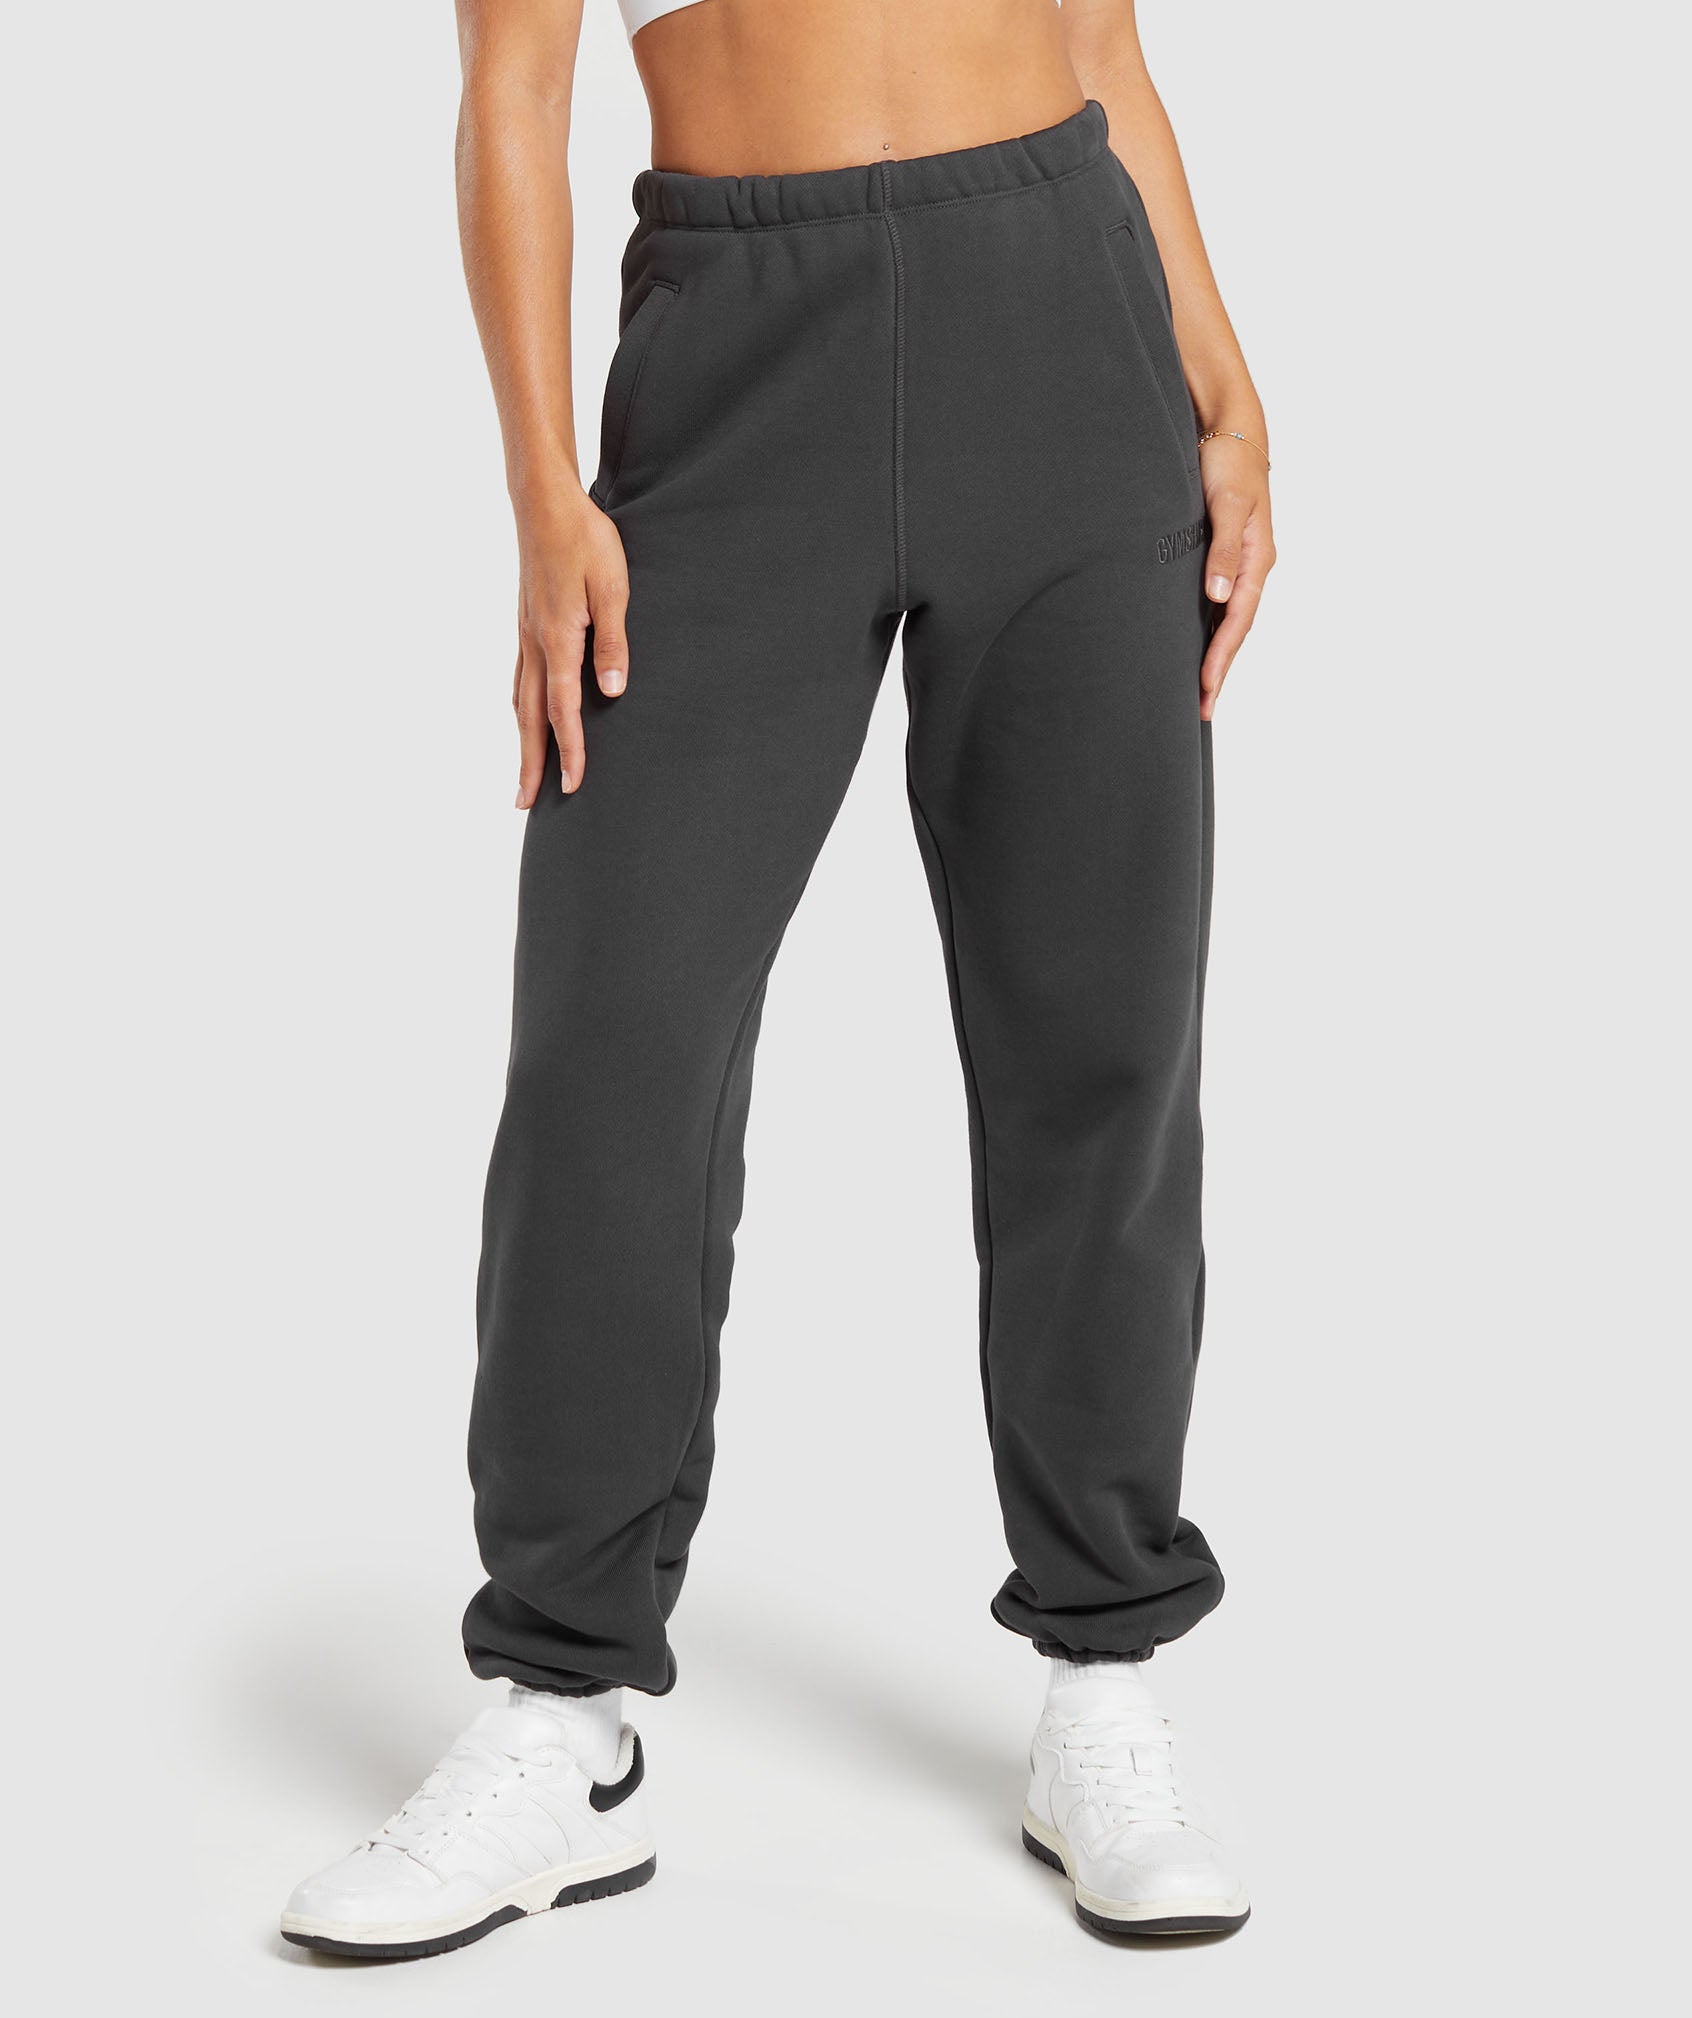 REETWO Women's Joggers Pants with Pockets High Waist Yoga Pants Lightweight  Sweatpants Women Workout Pants Lounge Pants